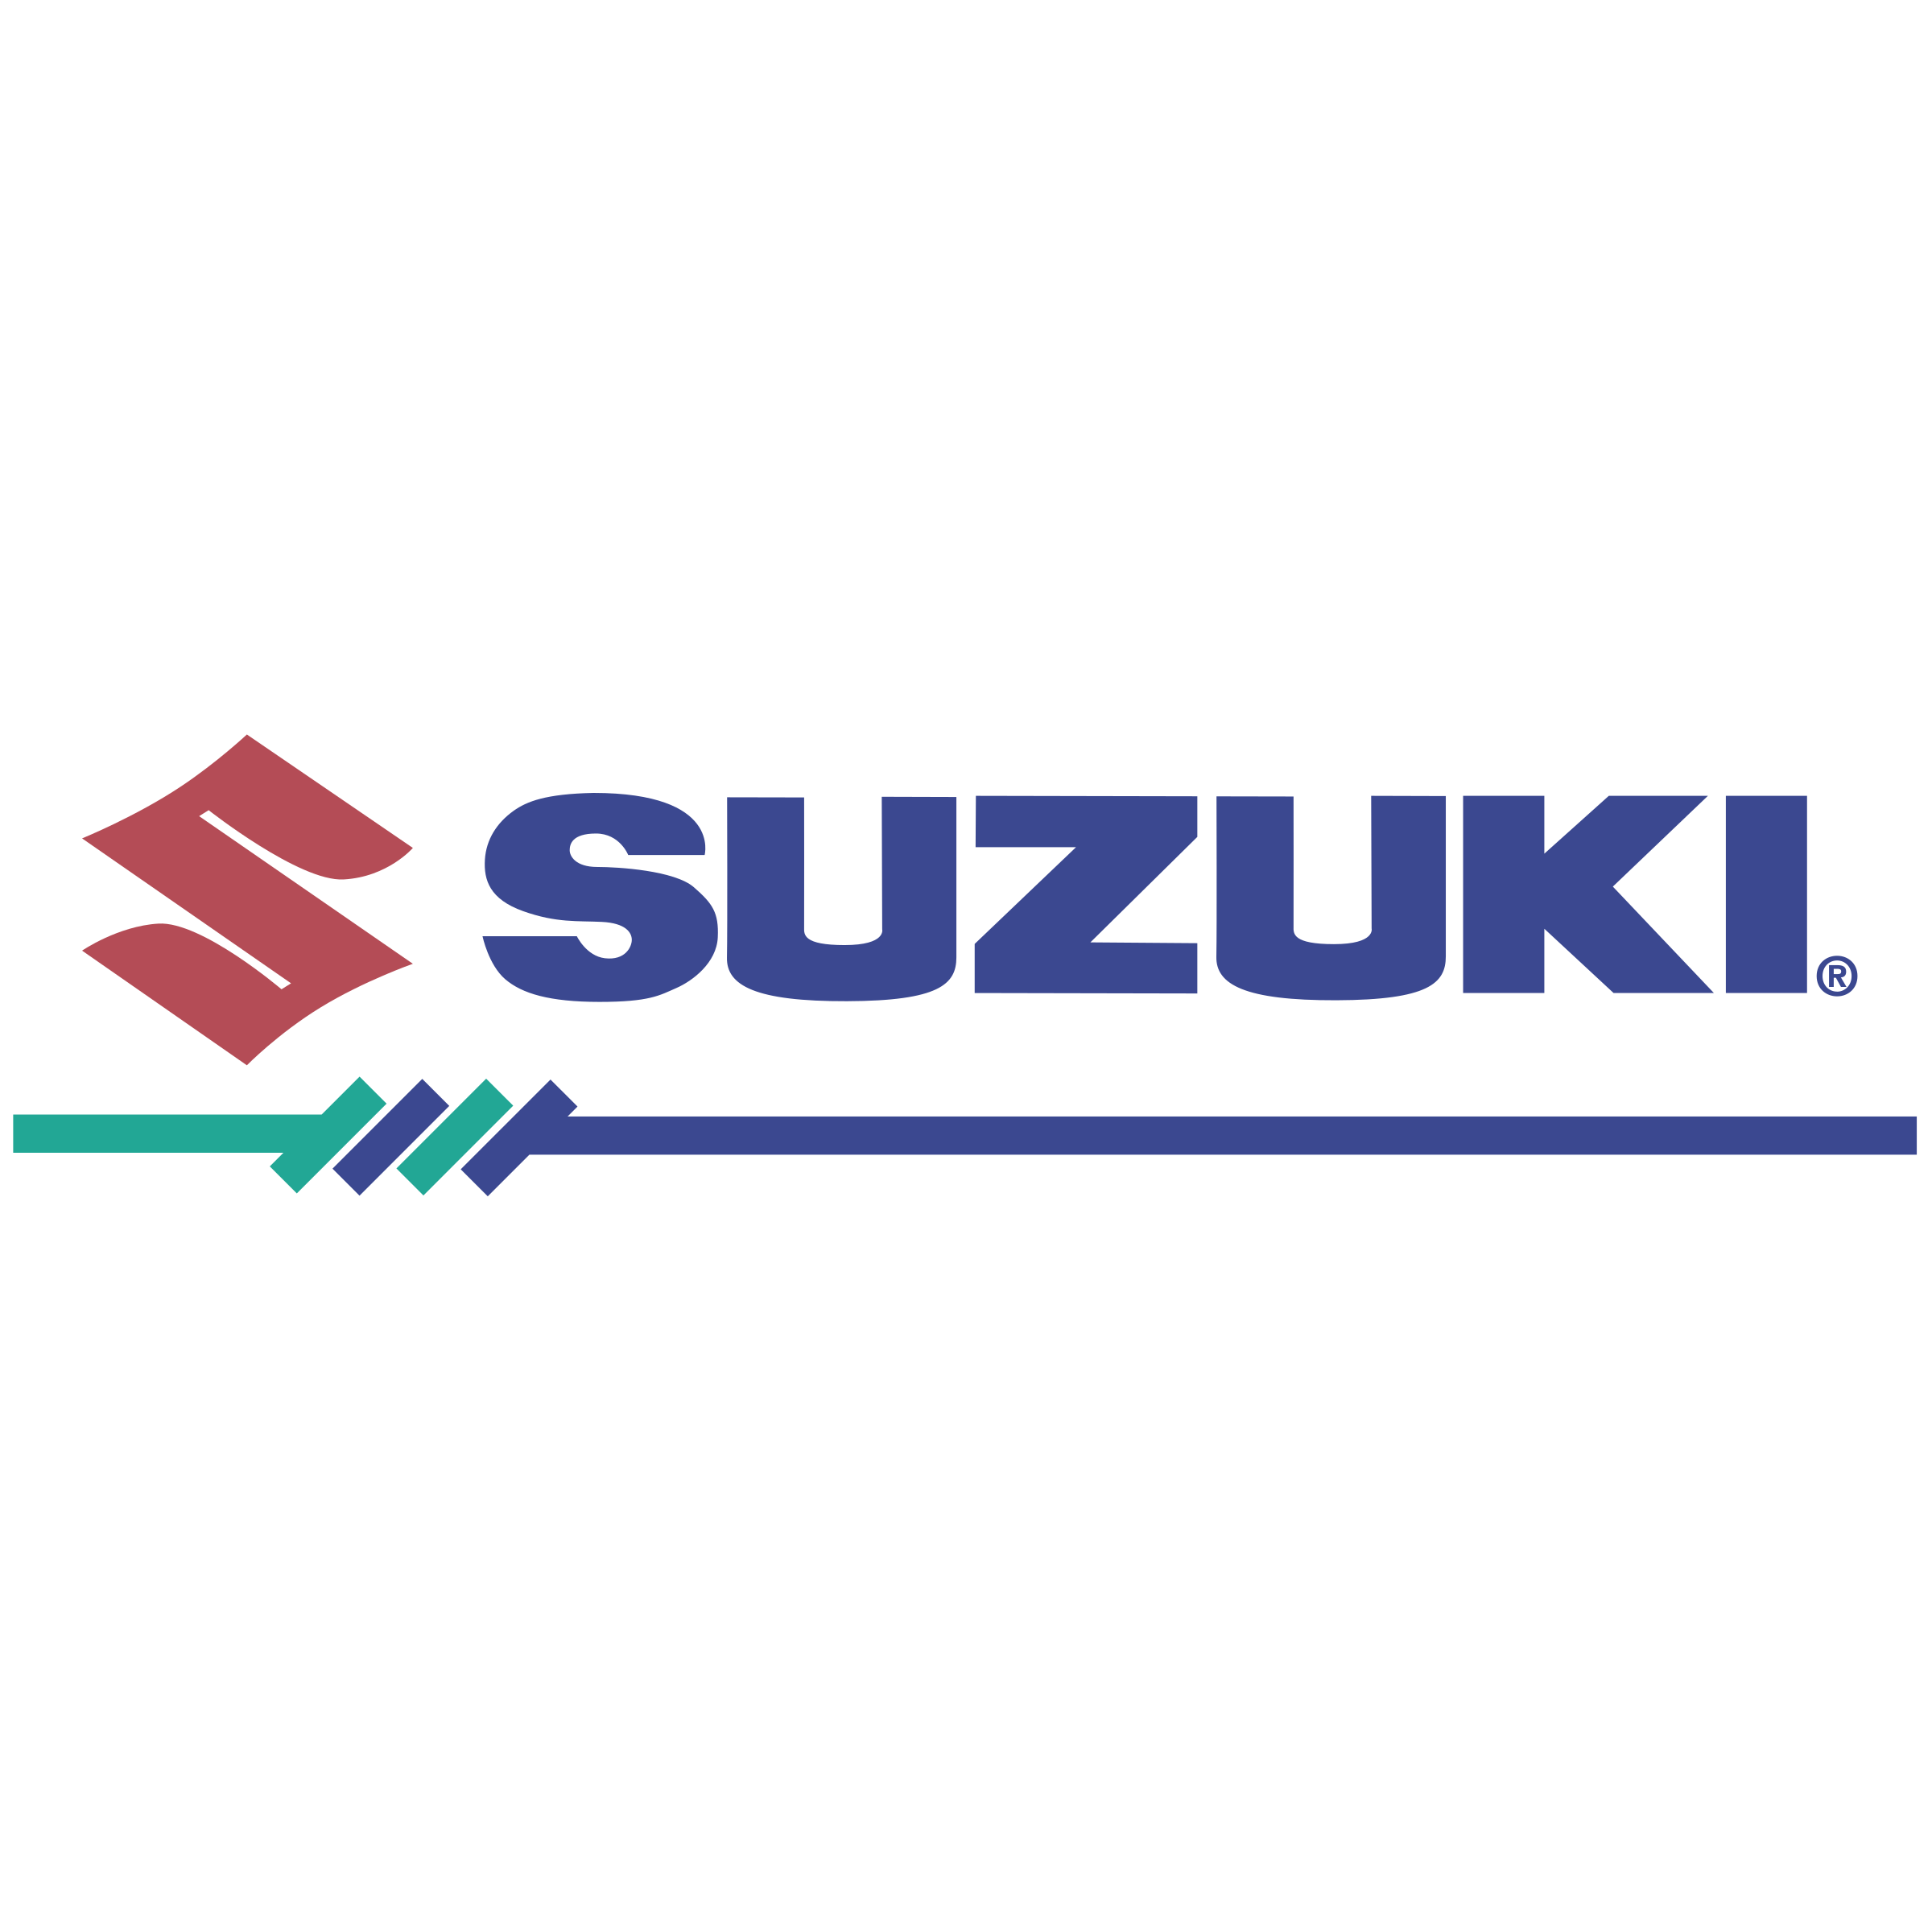 Quality High Suzuki Acronym Design PNG